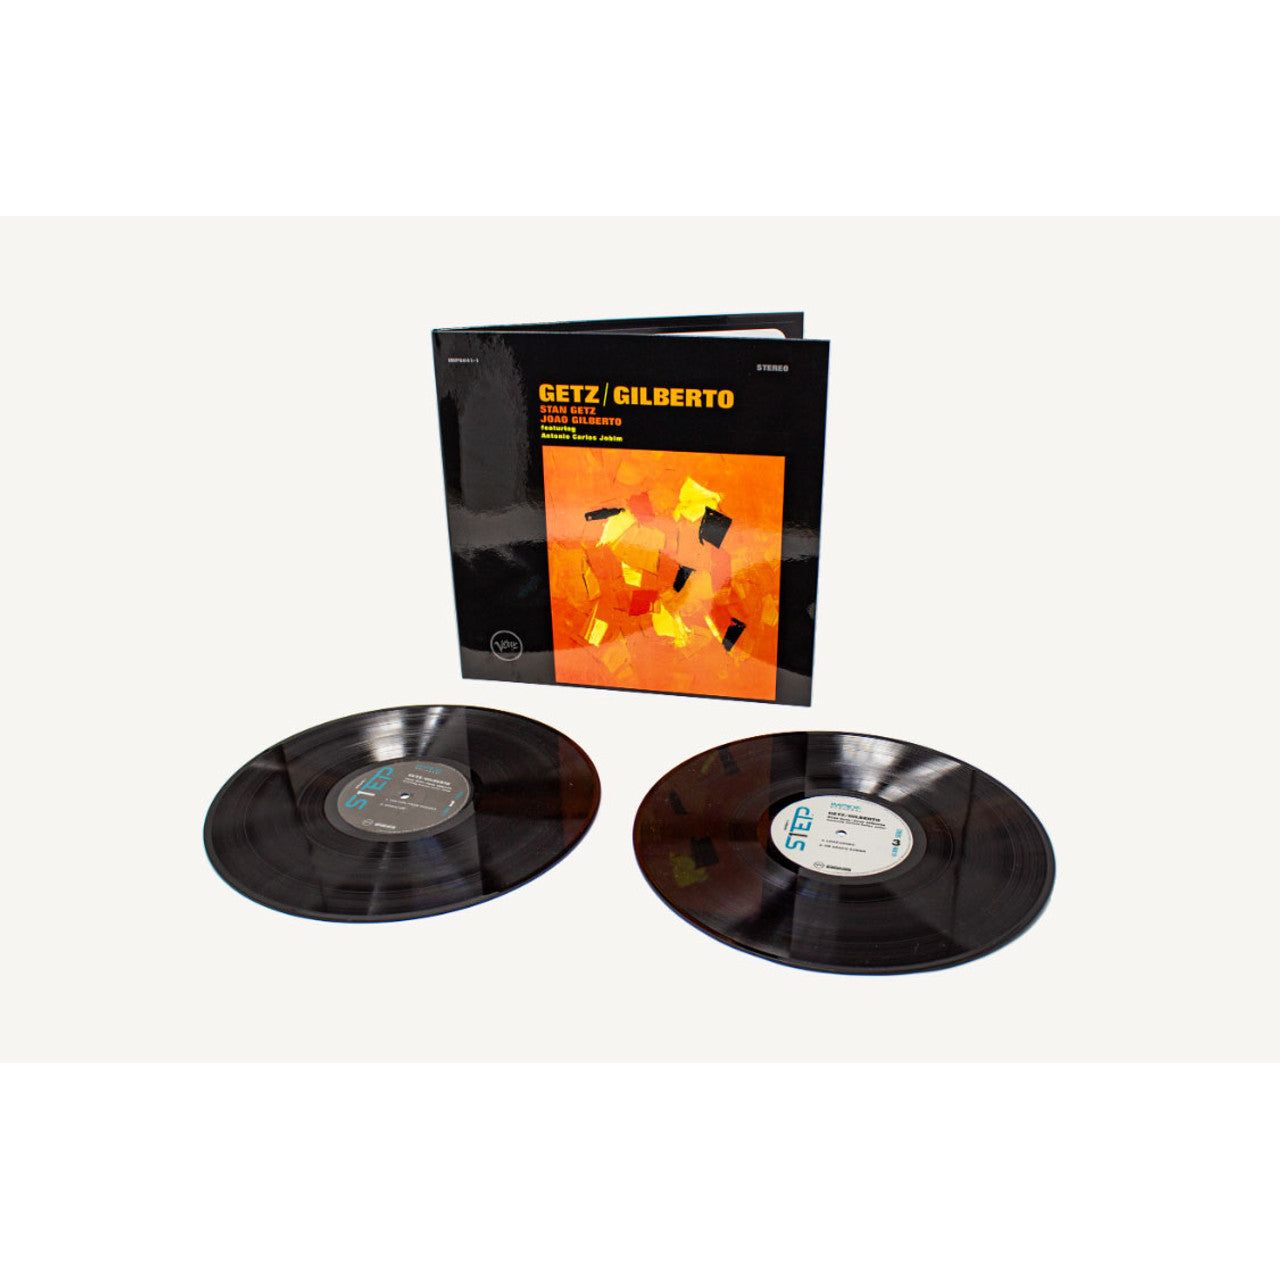 Stan Getz & Joao Gilberto - Getz/Gilberto - Impex 1STEP 45rpm LP